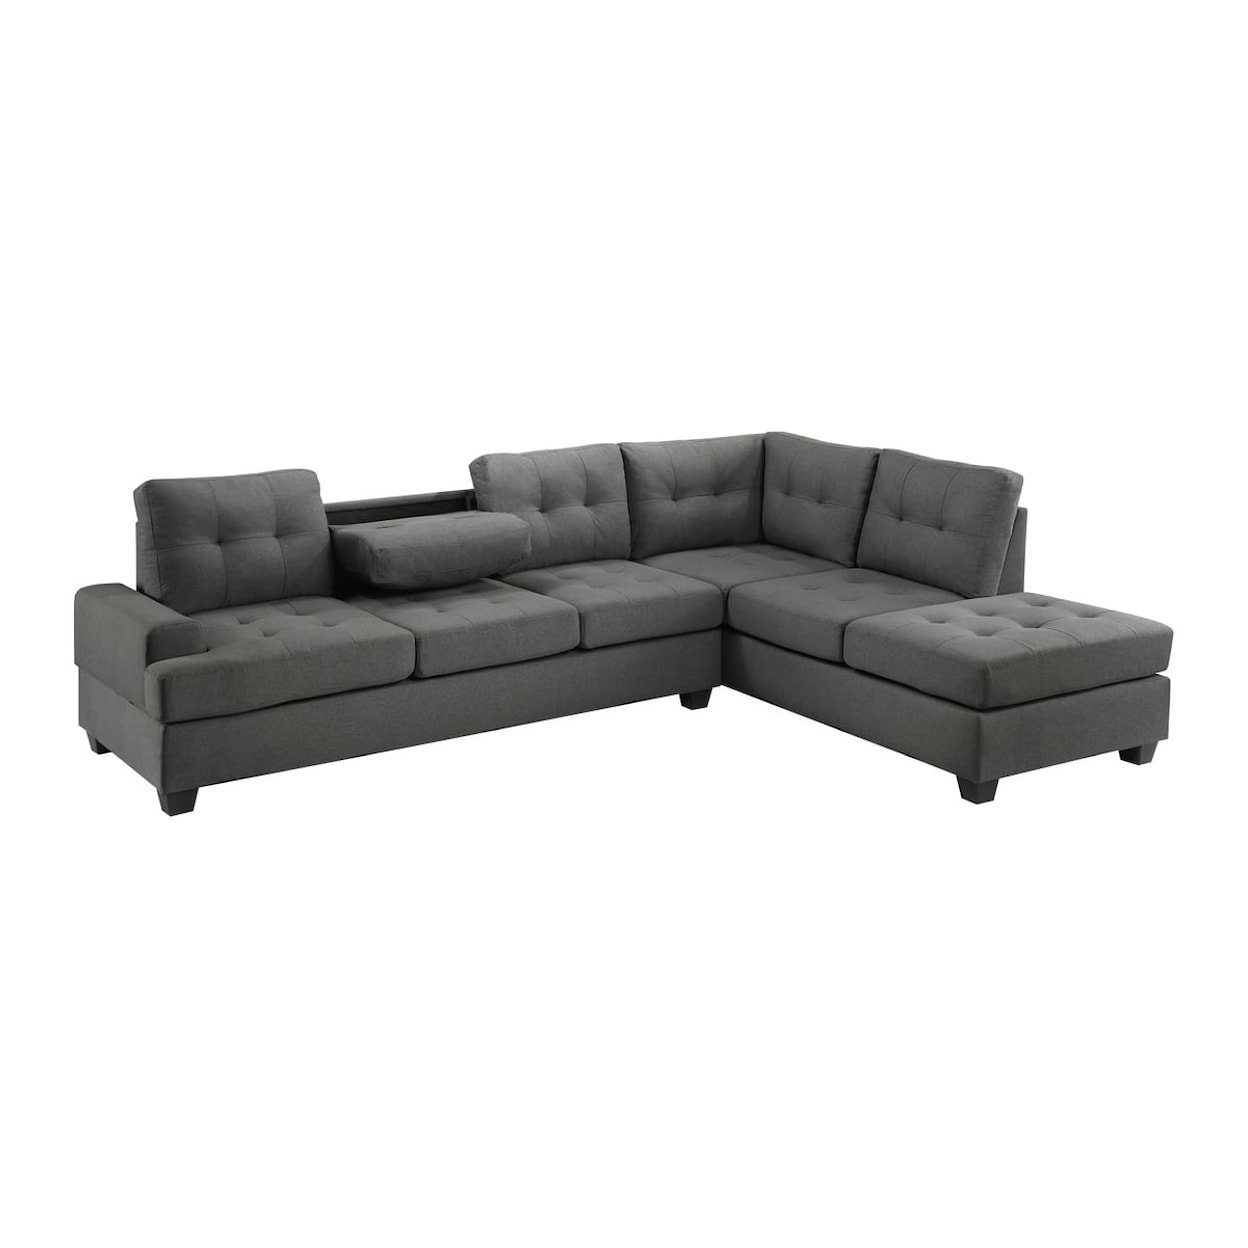 Homelegance Furniture Dunstan 2-Piece Sectional Sofa